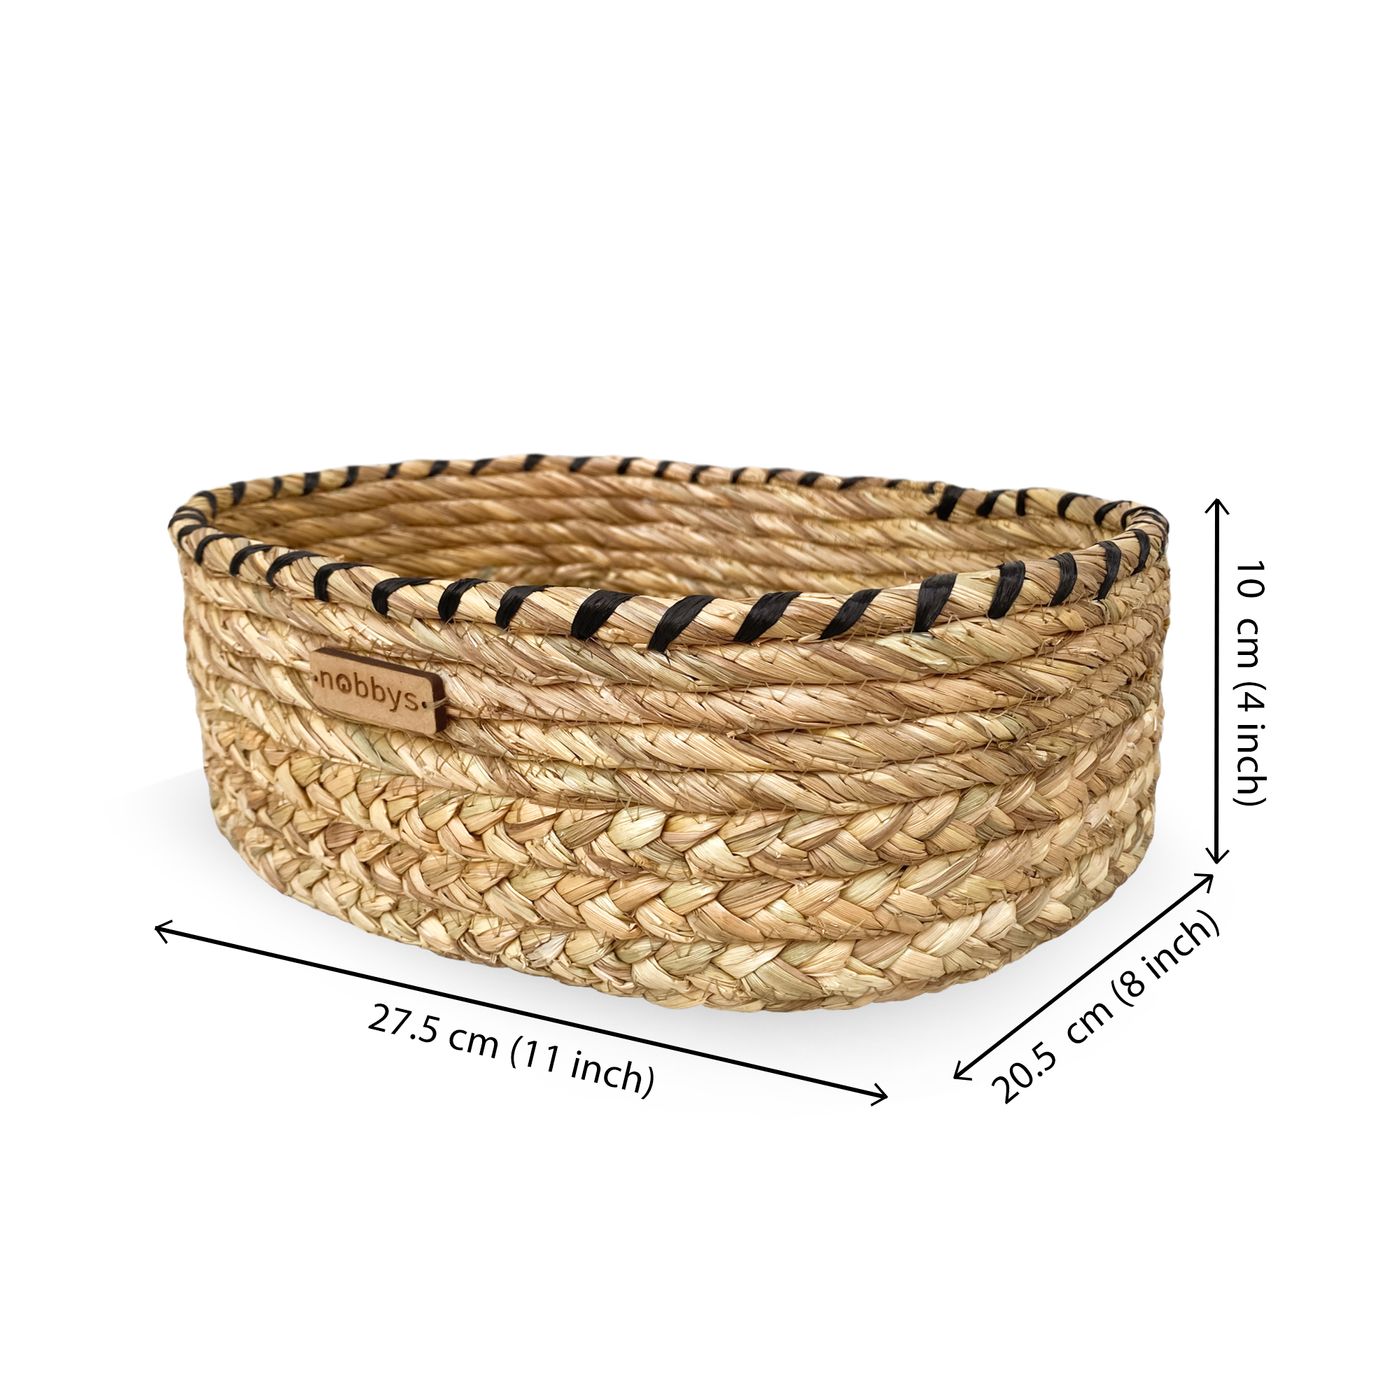 Oval Black Raffia Coiled Golden Grass Storage Basket (11" x 8" x 4") Nobbys